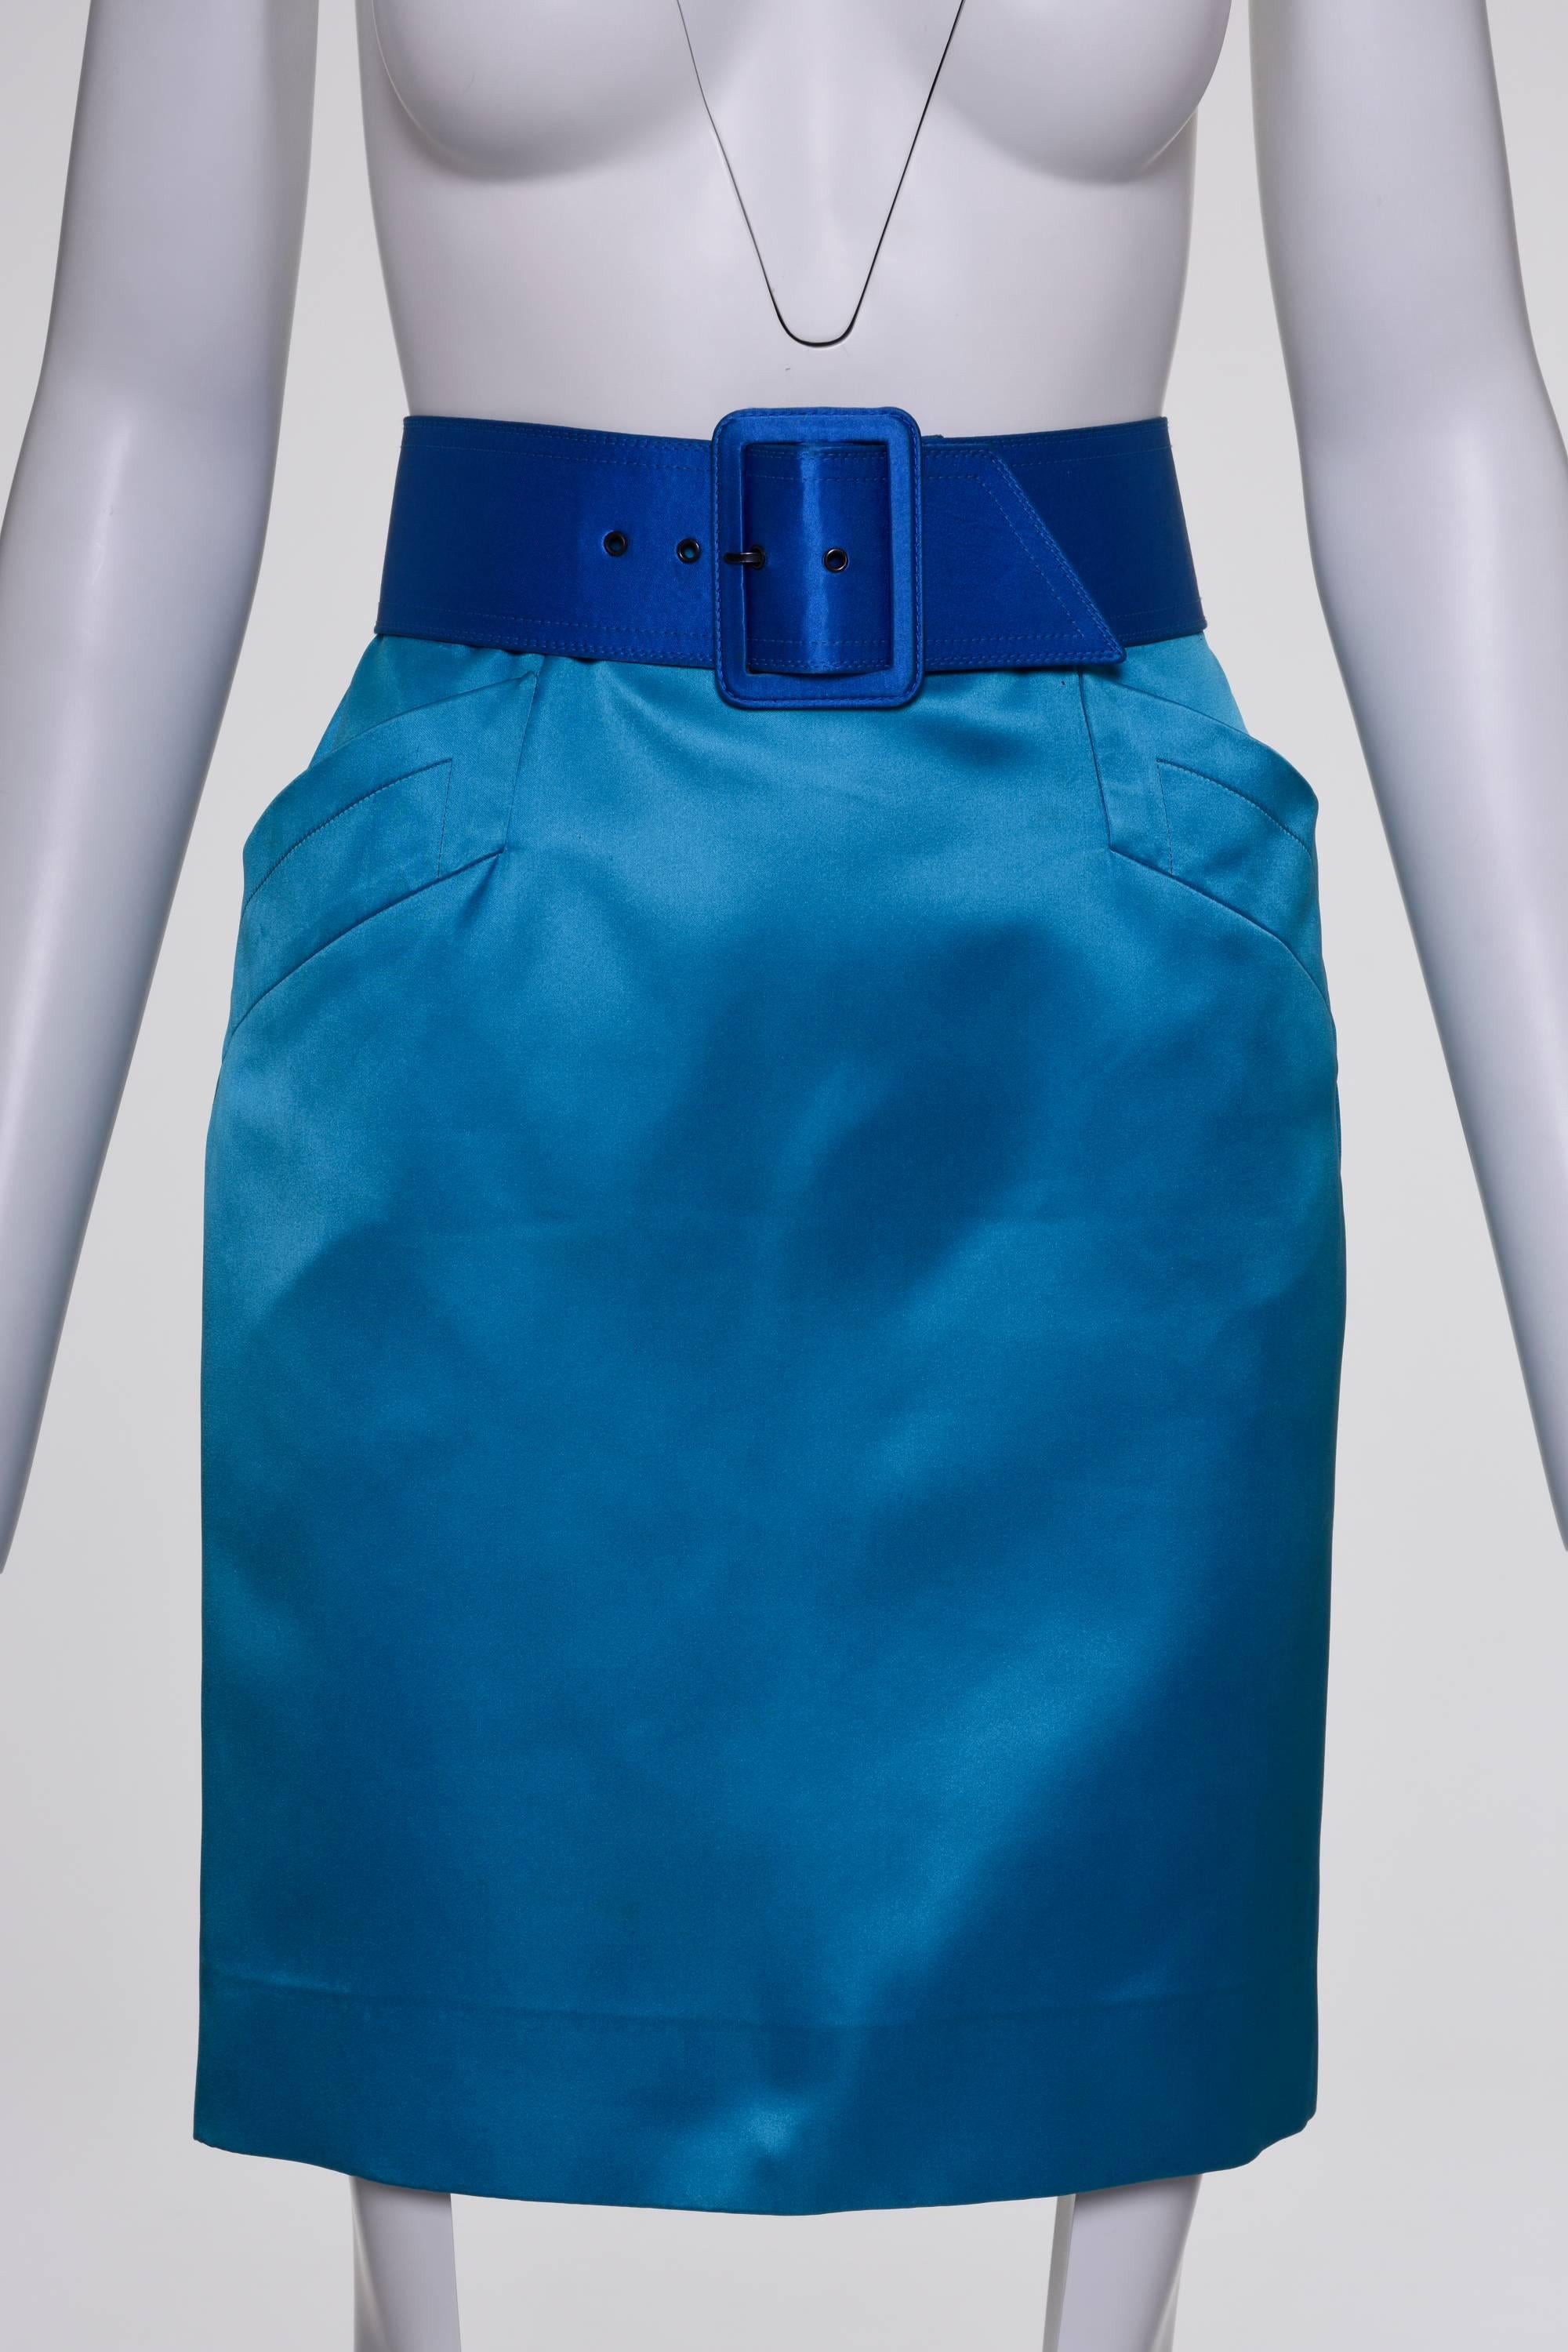 Women's 1980s YVES SAINT LAURENT Rive Gauche Silk Satin Suit Skirt For Sale